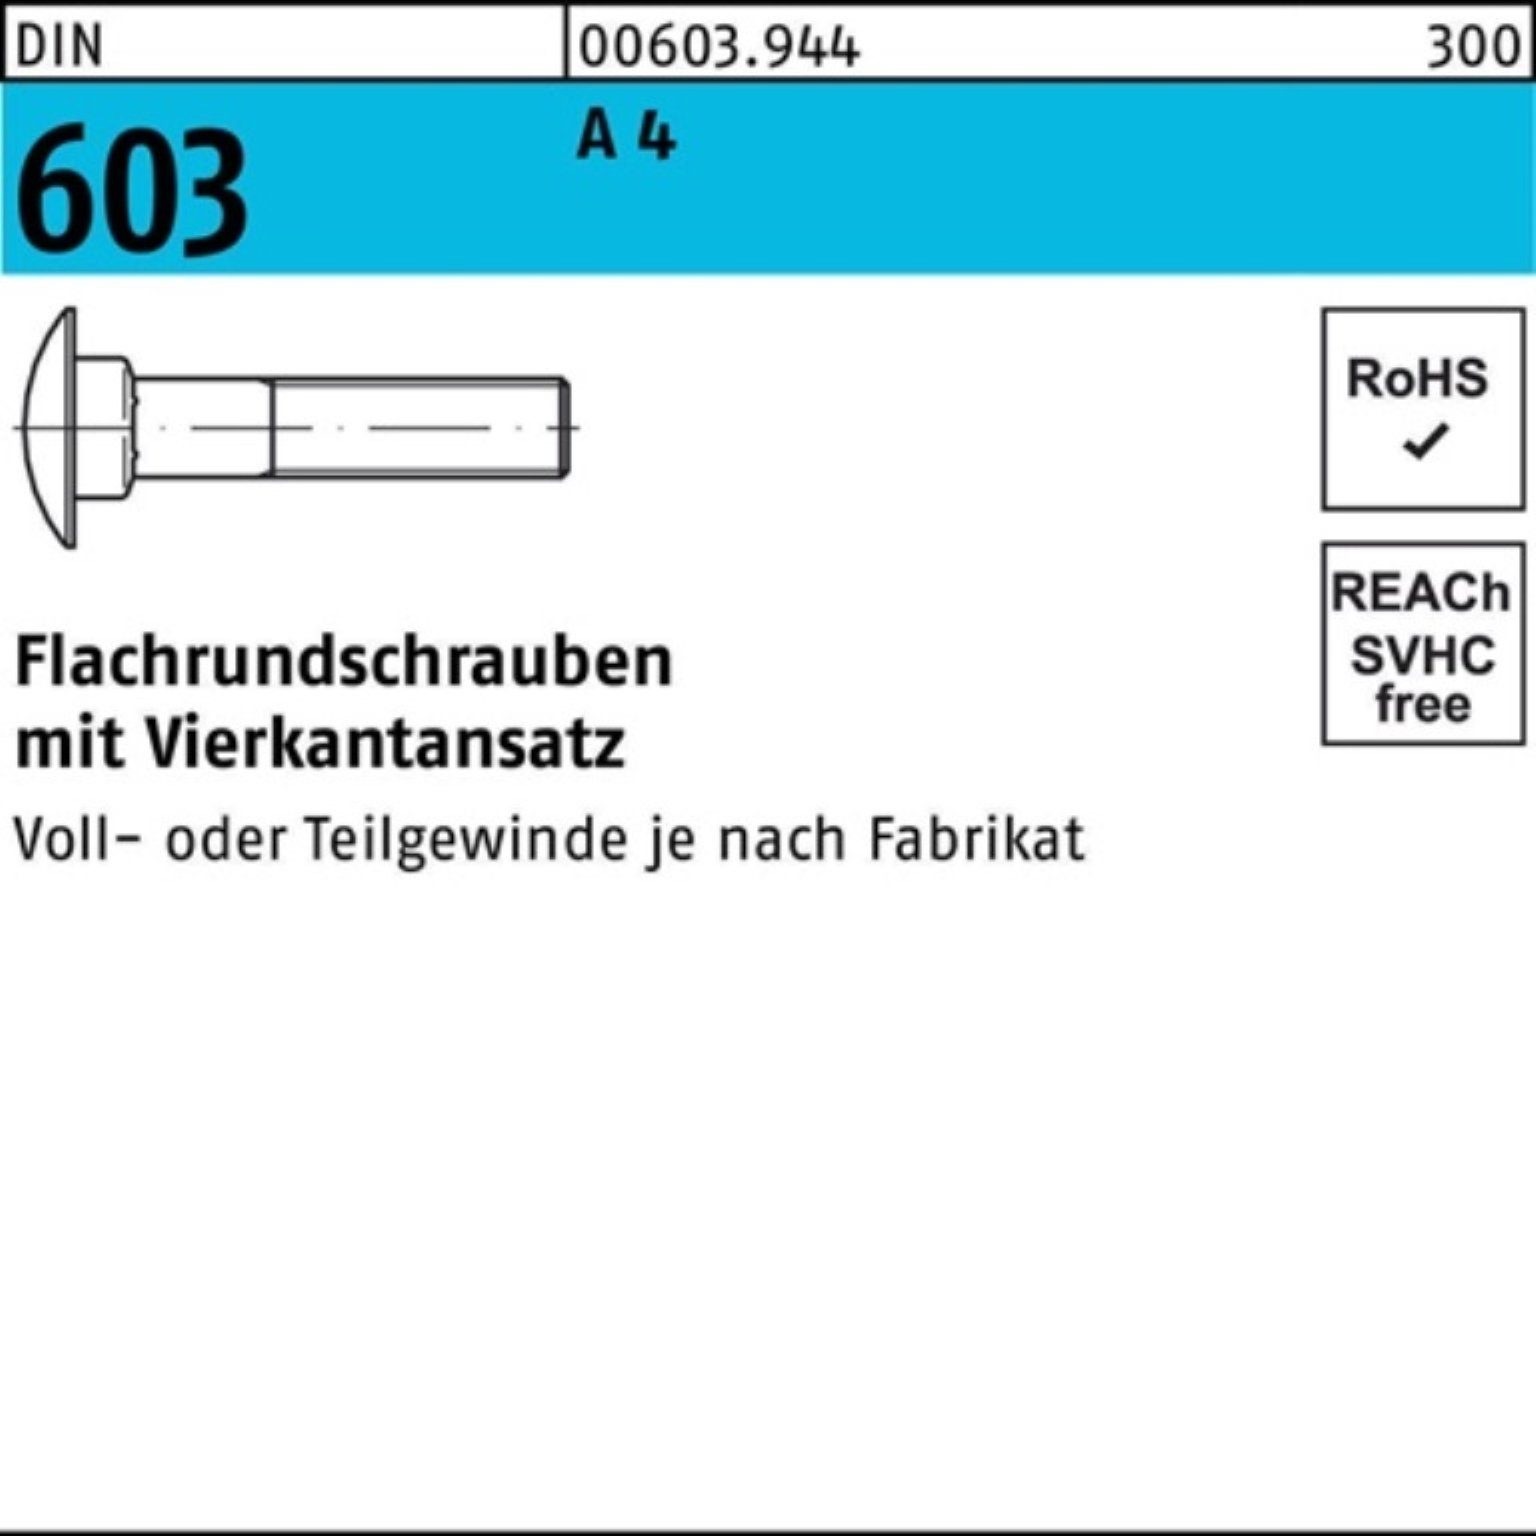 Reyher Schraube 100er Pack Flachrundschraube DIN 603 Vierkantansatz M16x 100 A 4 1 St